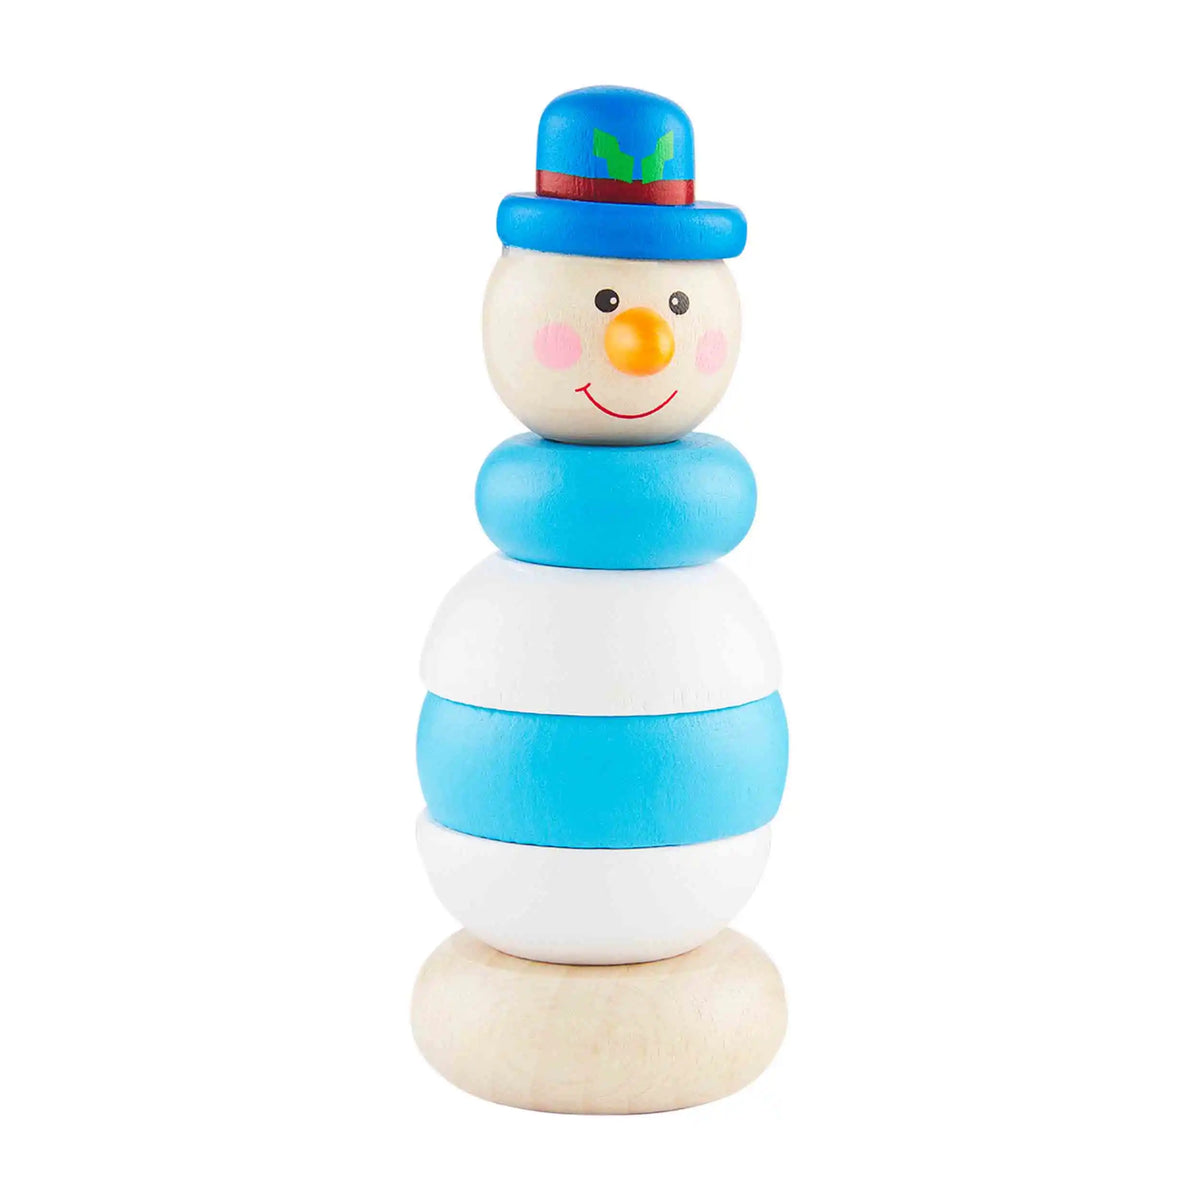 Snowman Stacker Toy